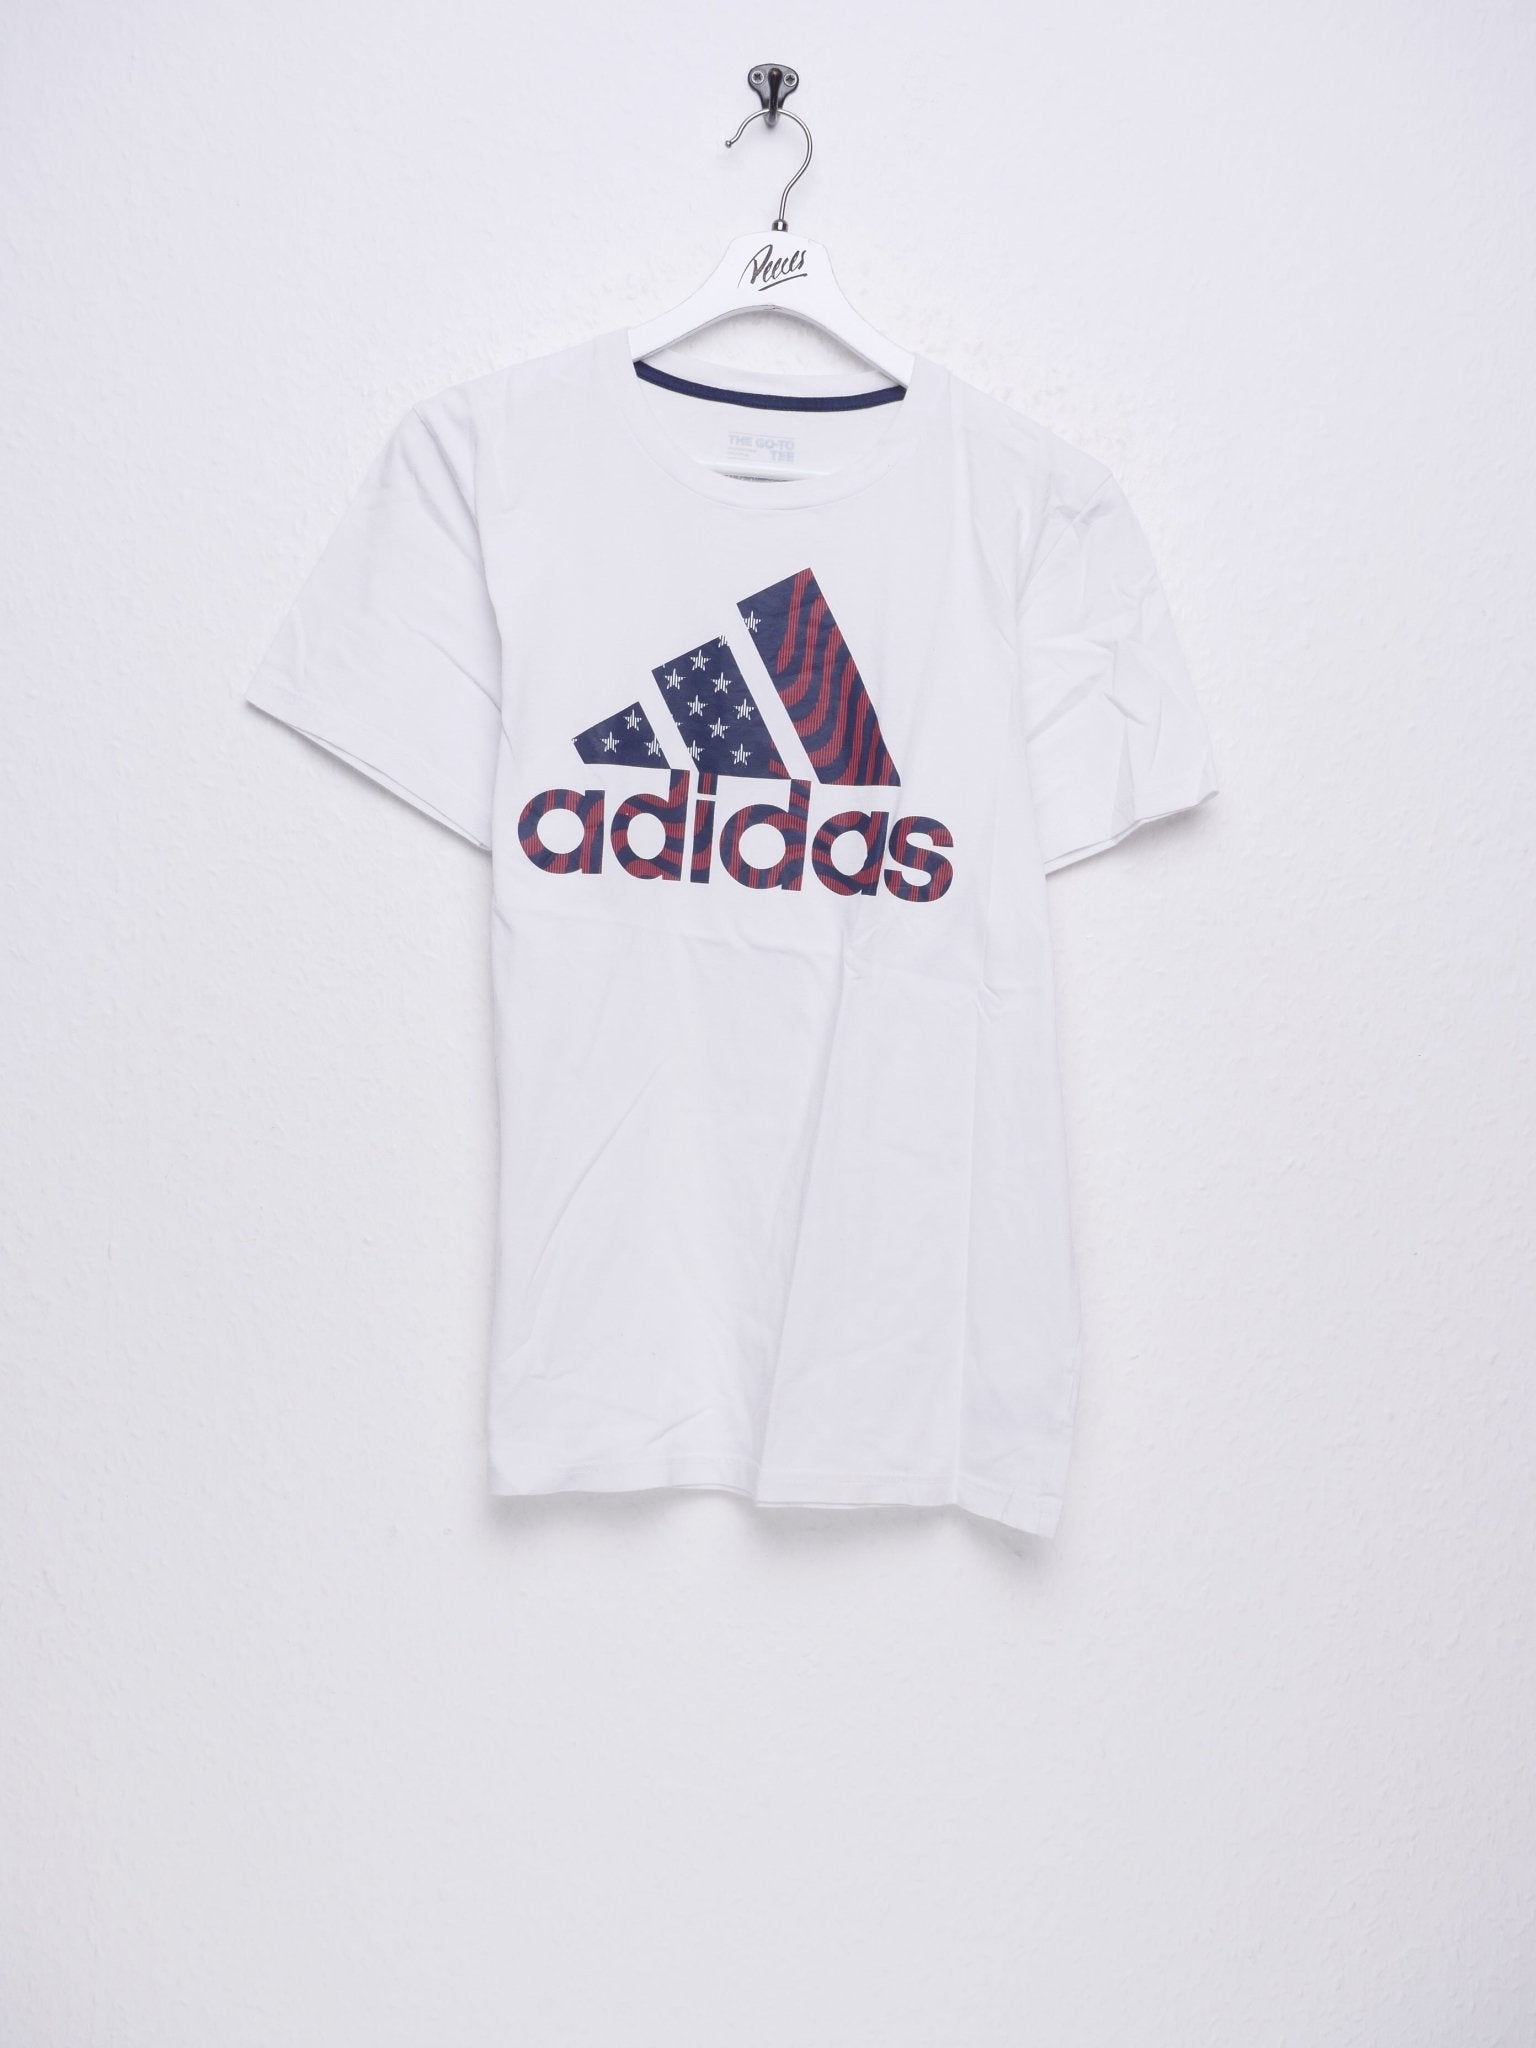 Adidas printed Big Logo white Shirt - Peeces